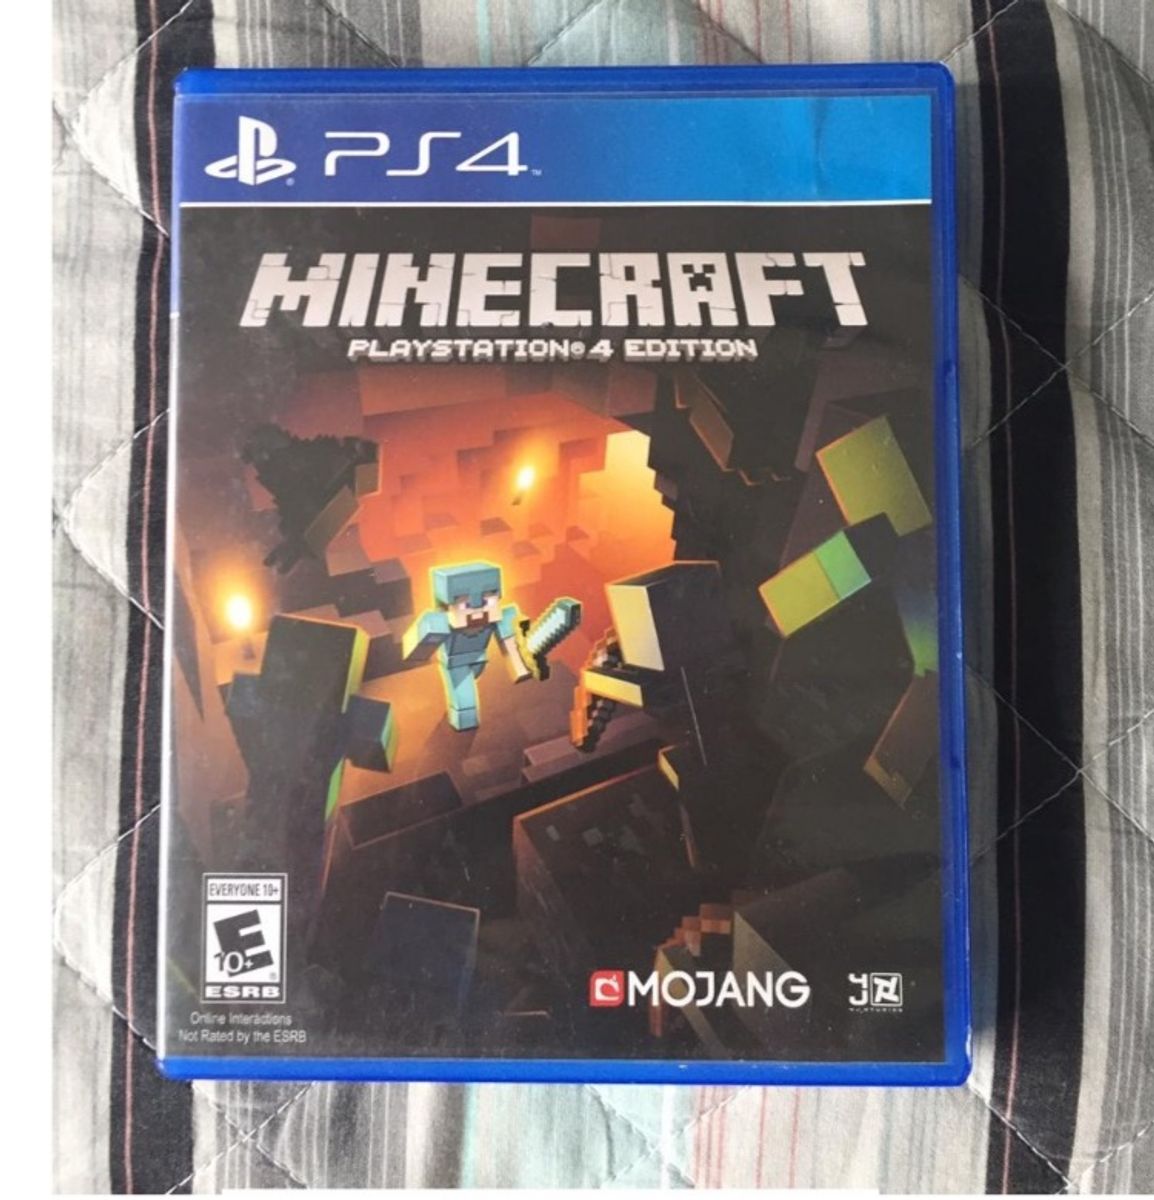 Minecraft PS4 - Compra jogos online na